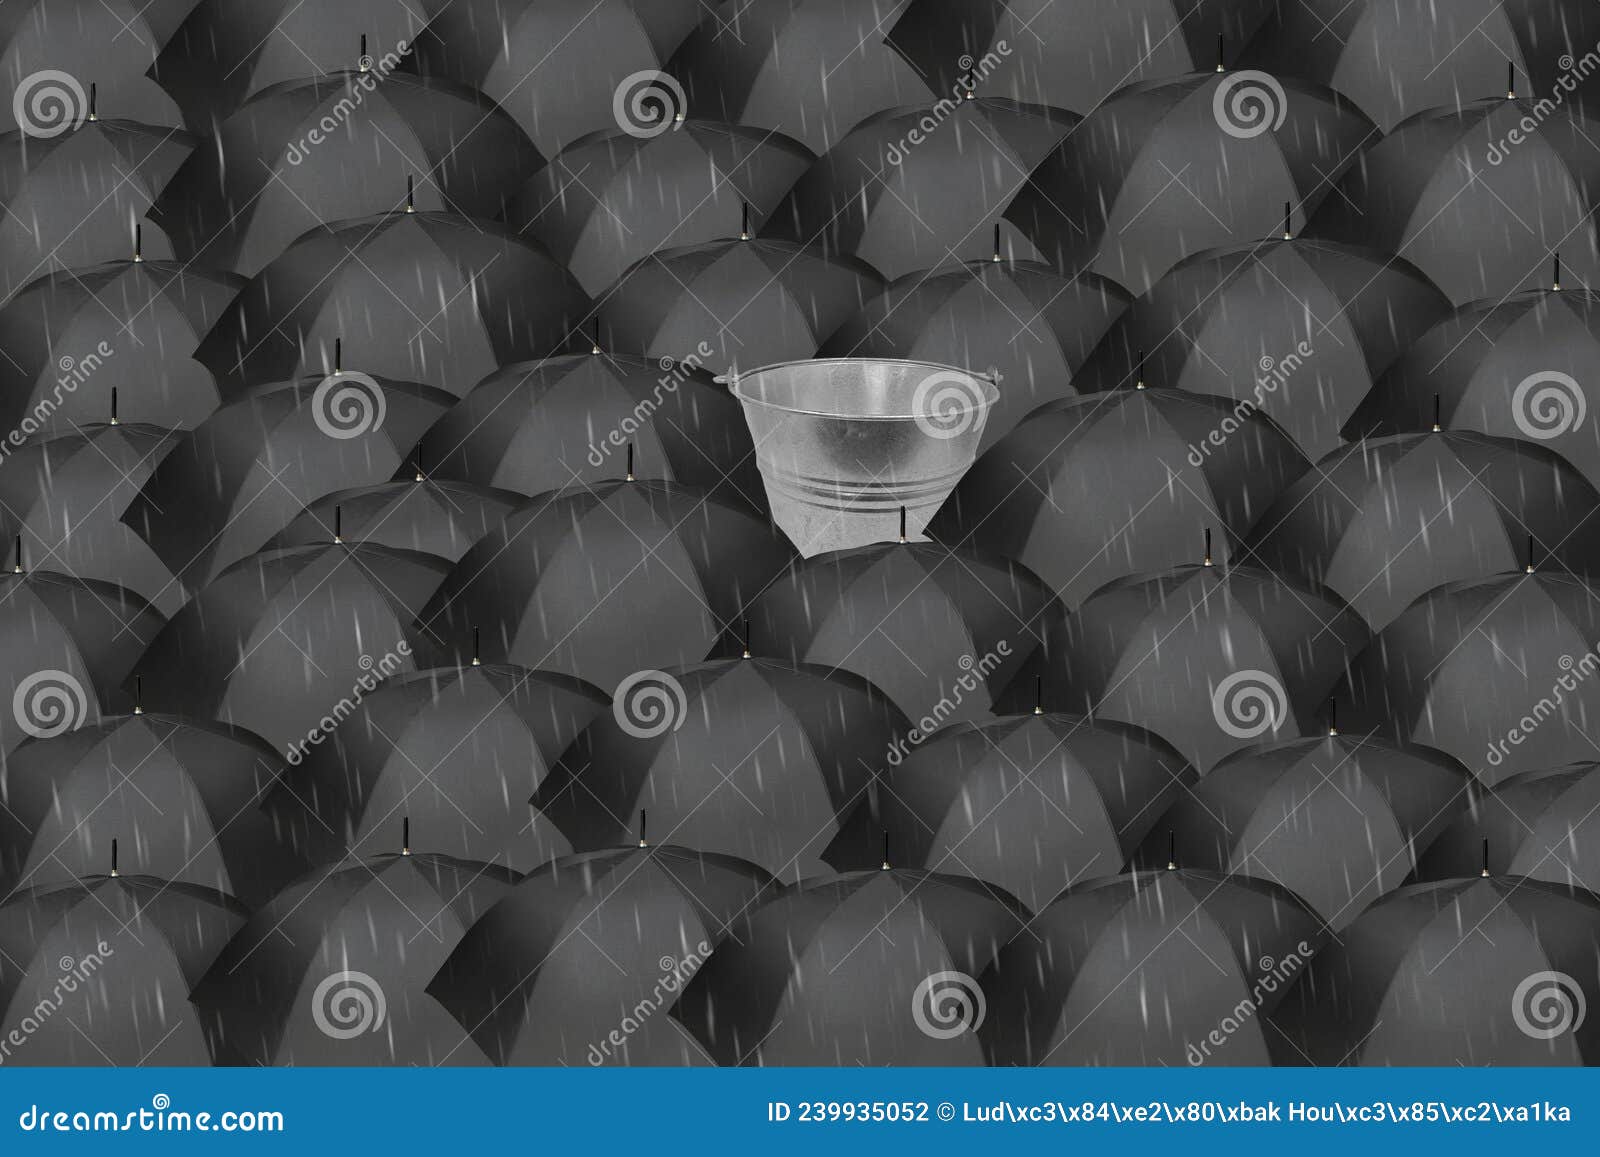 black umbrellas with a bucket izing a breakthrough idea, audacity.